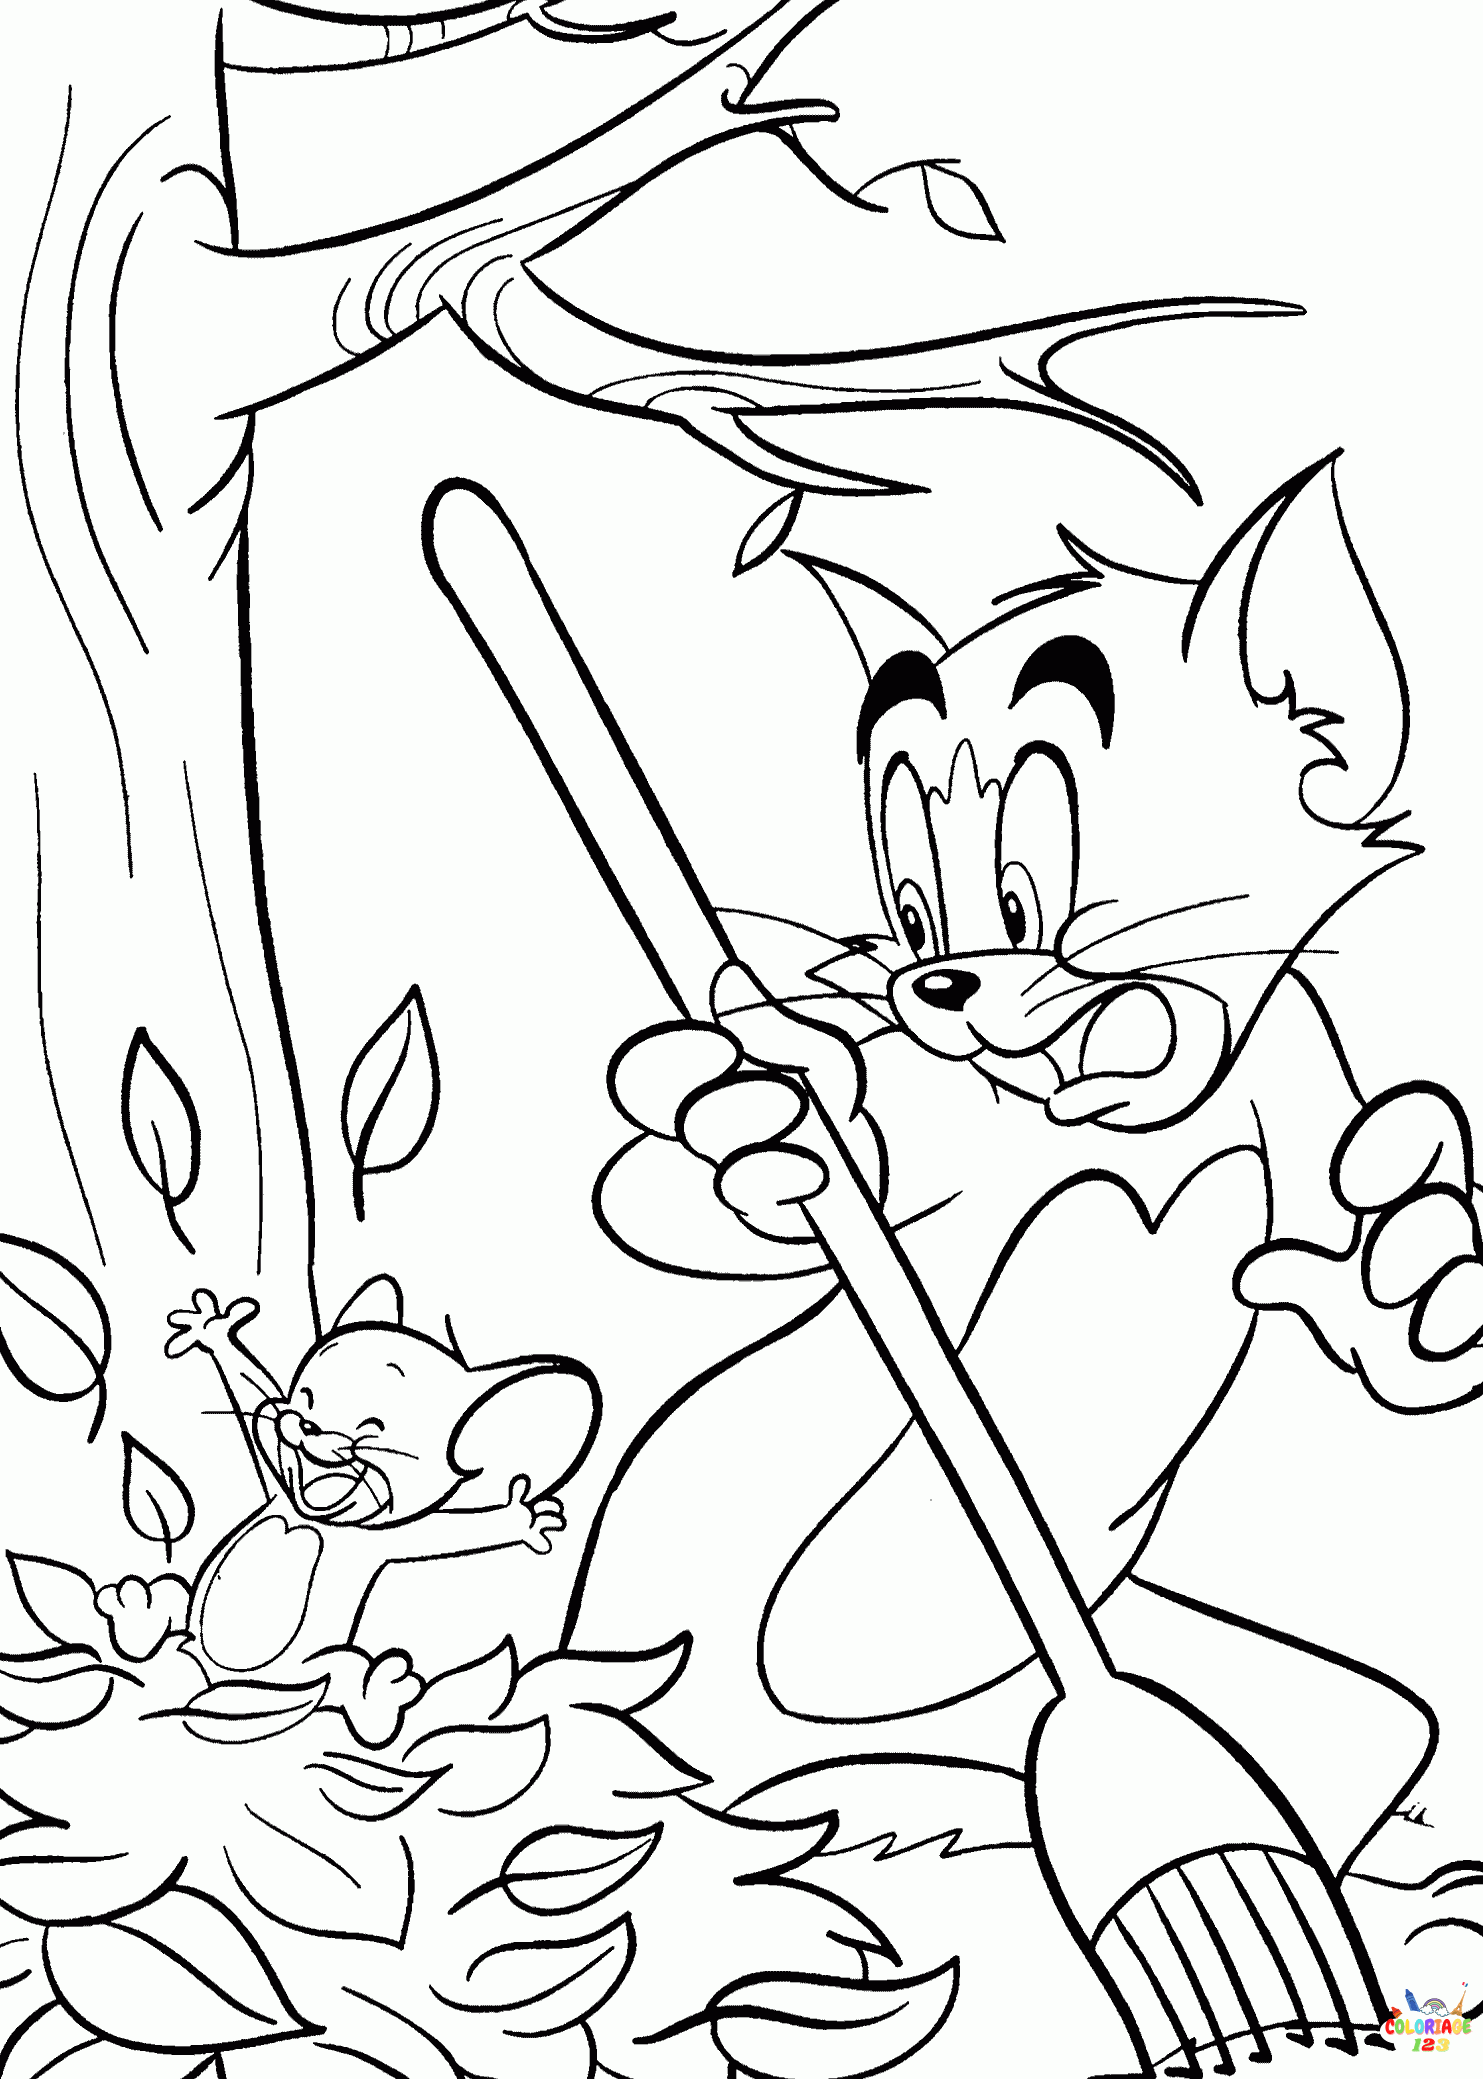 Tom et Jerry 6